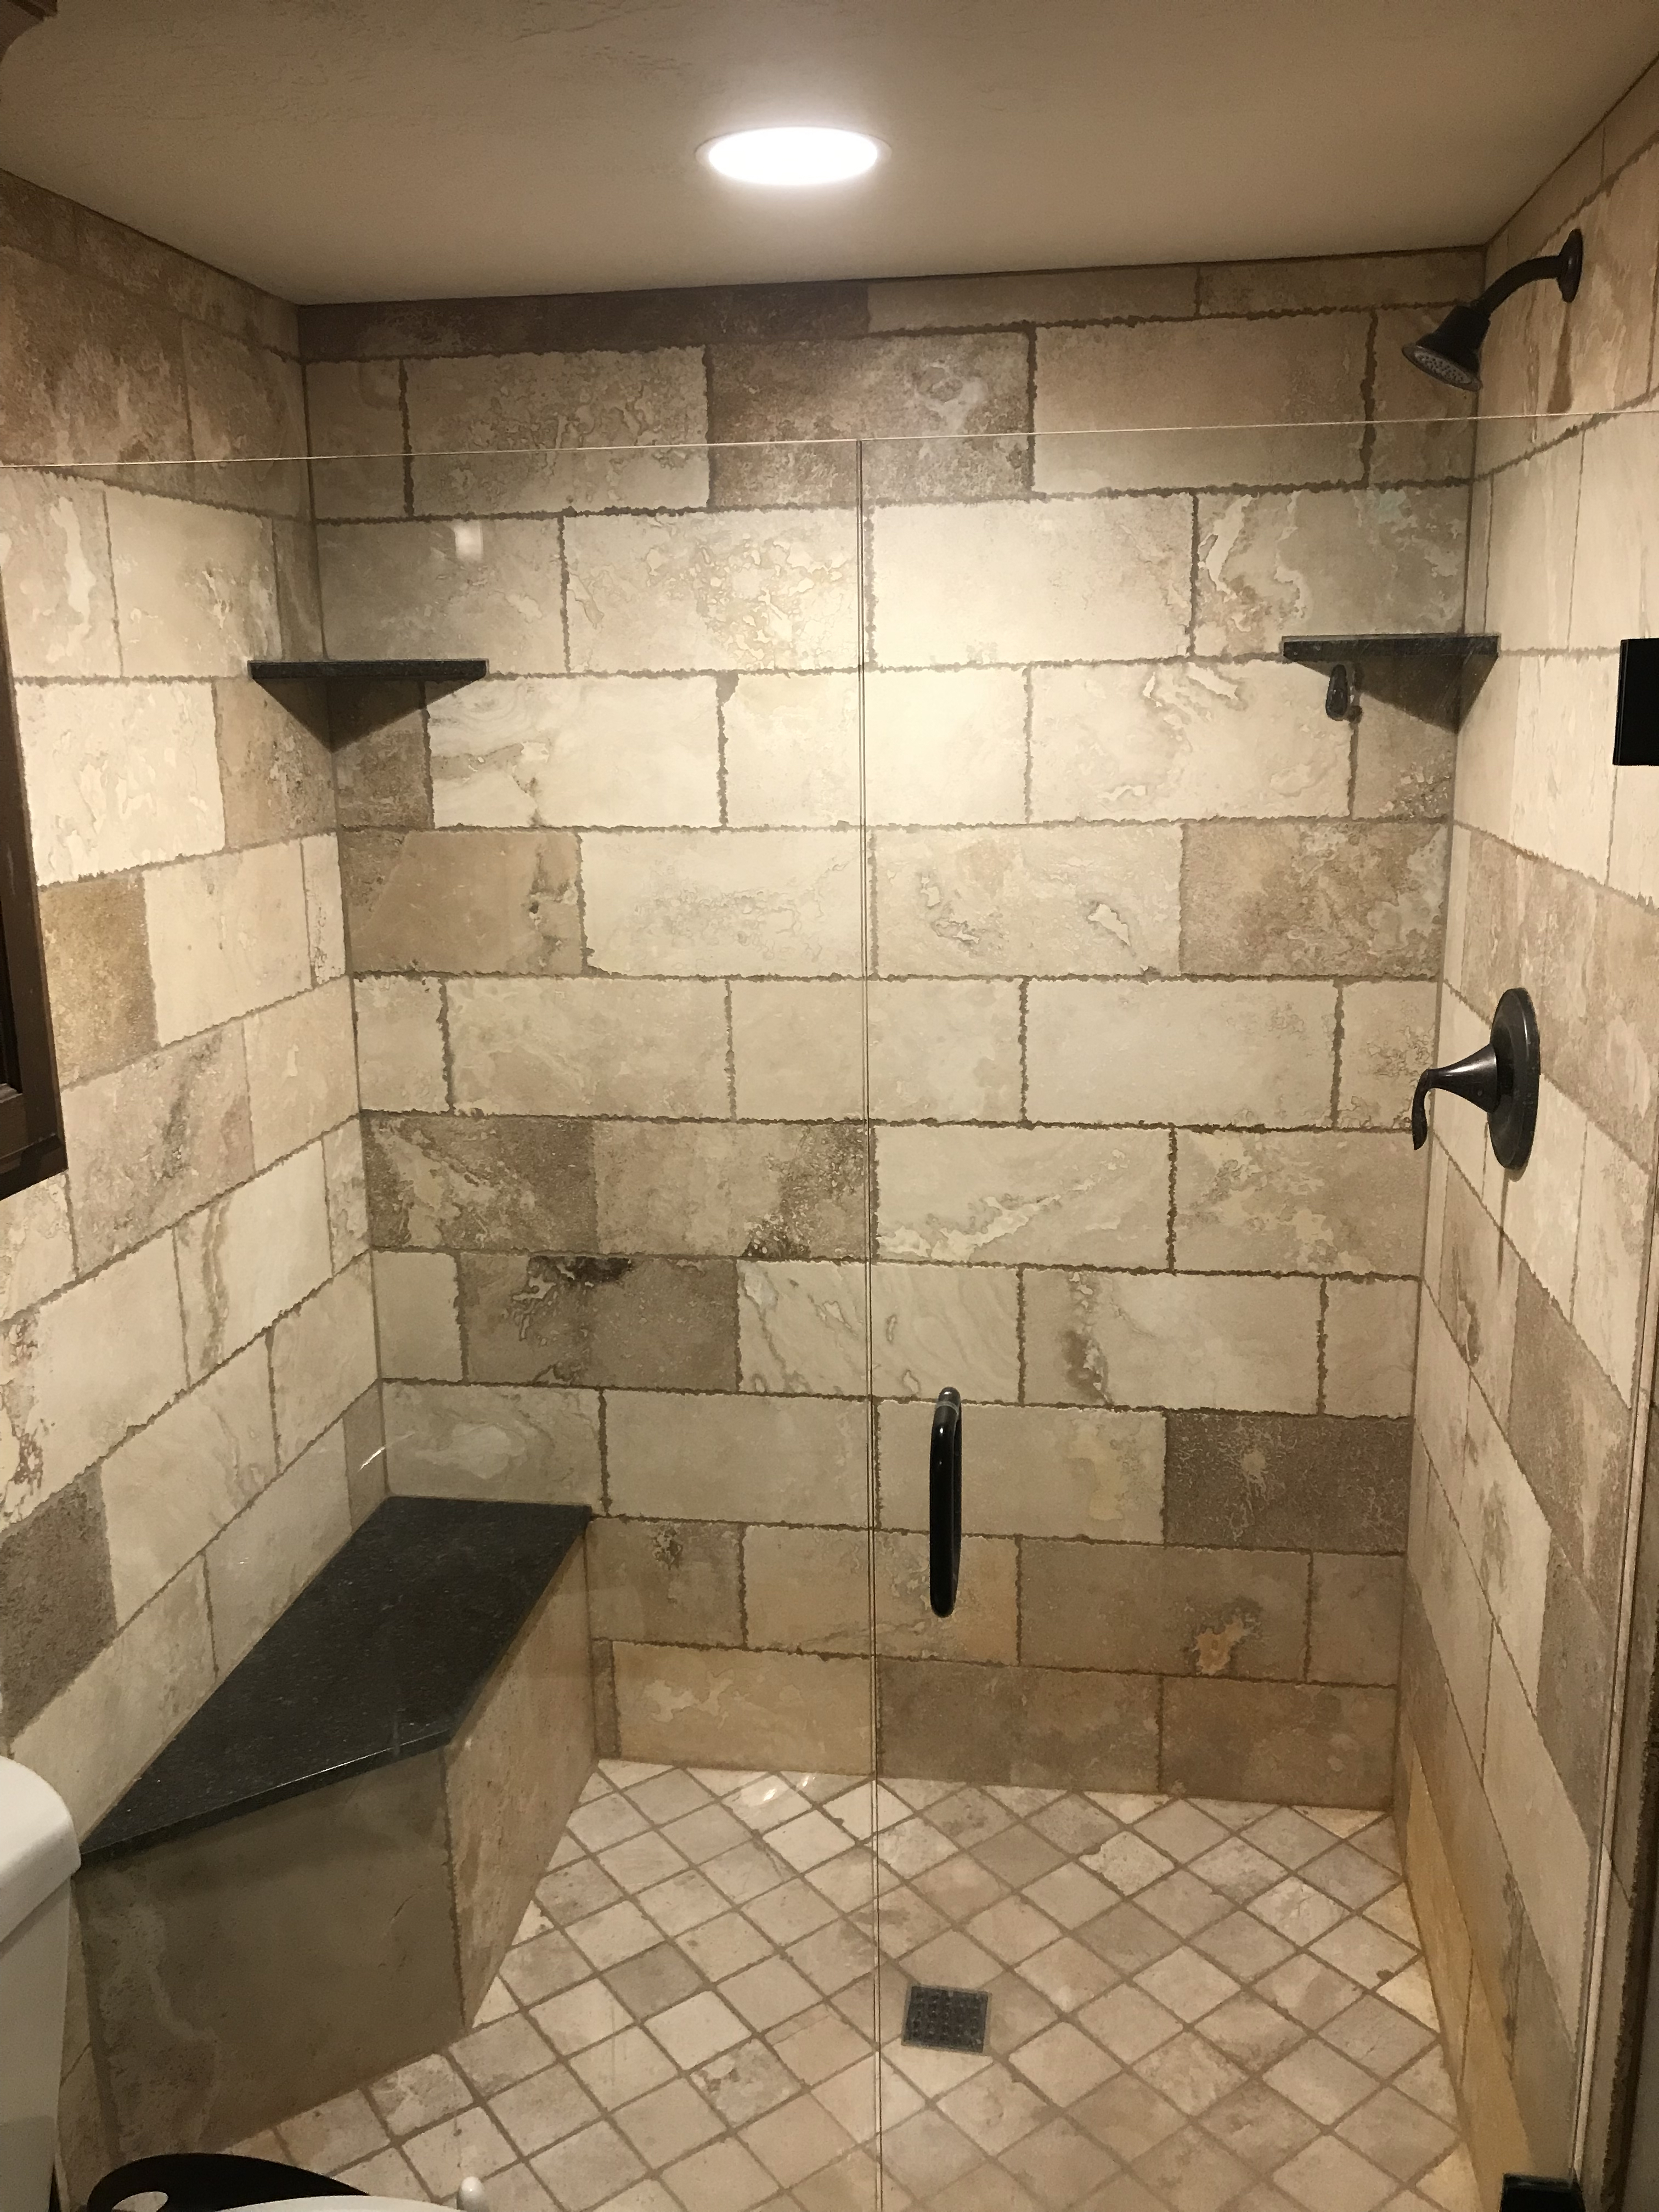 Beautiful Tiled Shower - Bathrooms